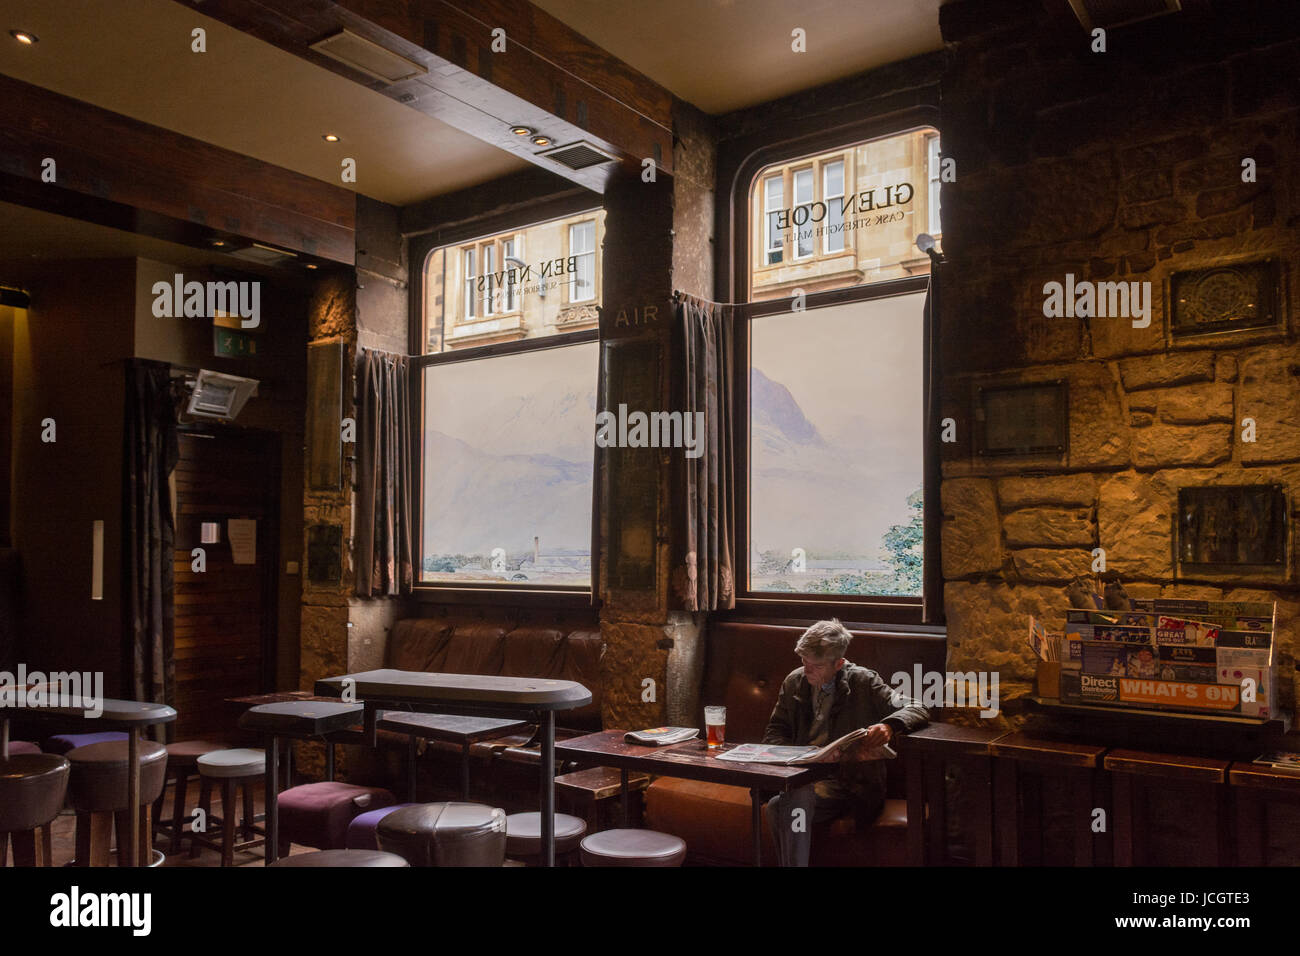 The Ben Nevis pub, Finnieston, Glasgow, Scotland - man drinking pint and reading newspaper in front of Ben Nevis scene painted on windows Stock Photo